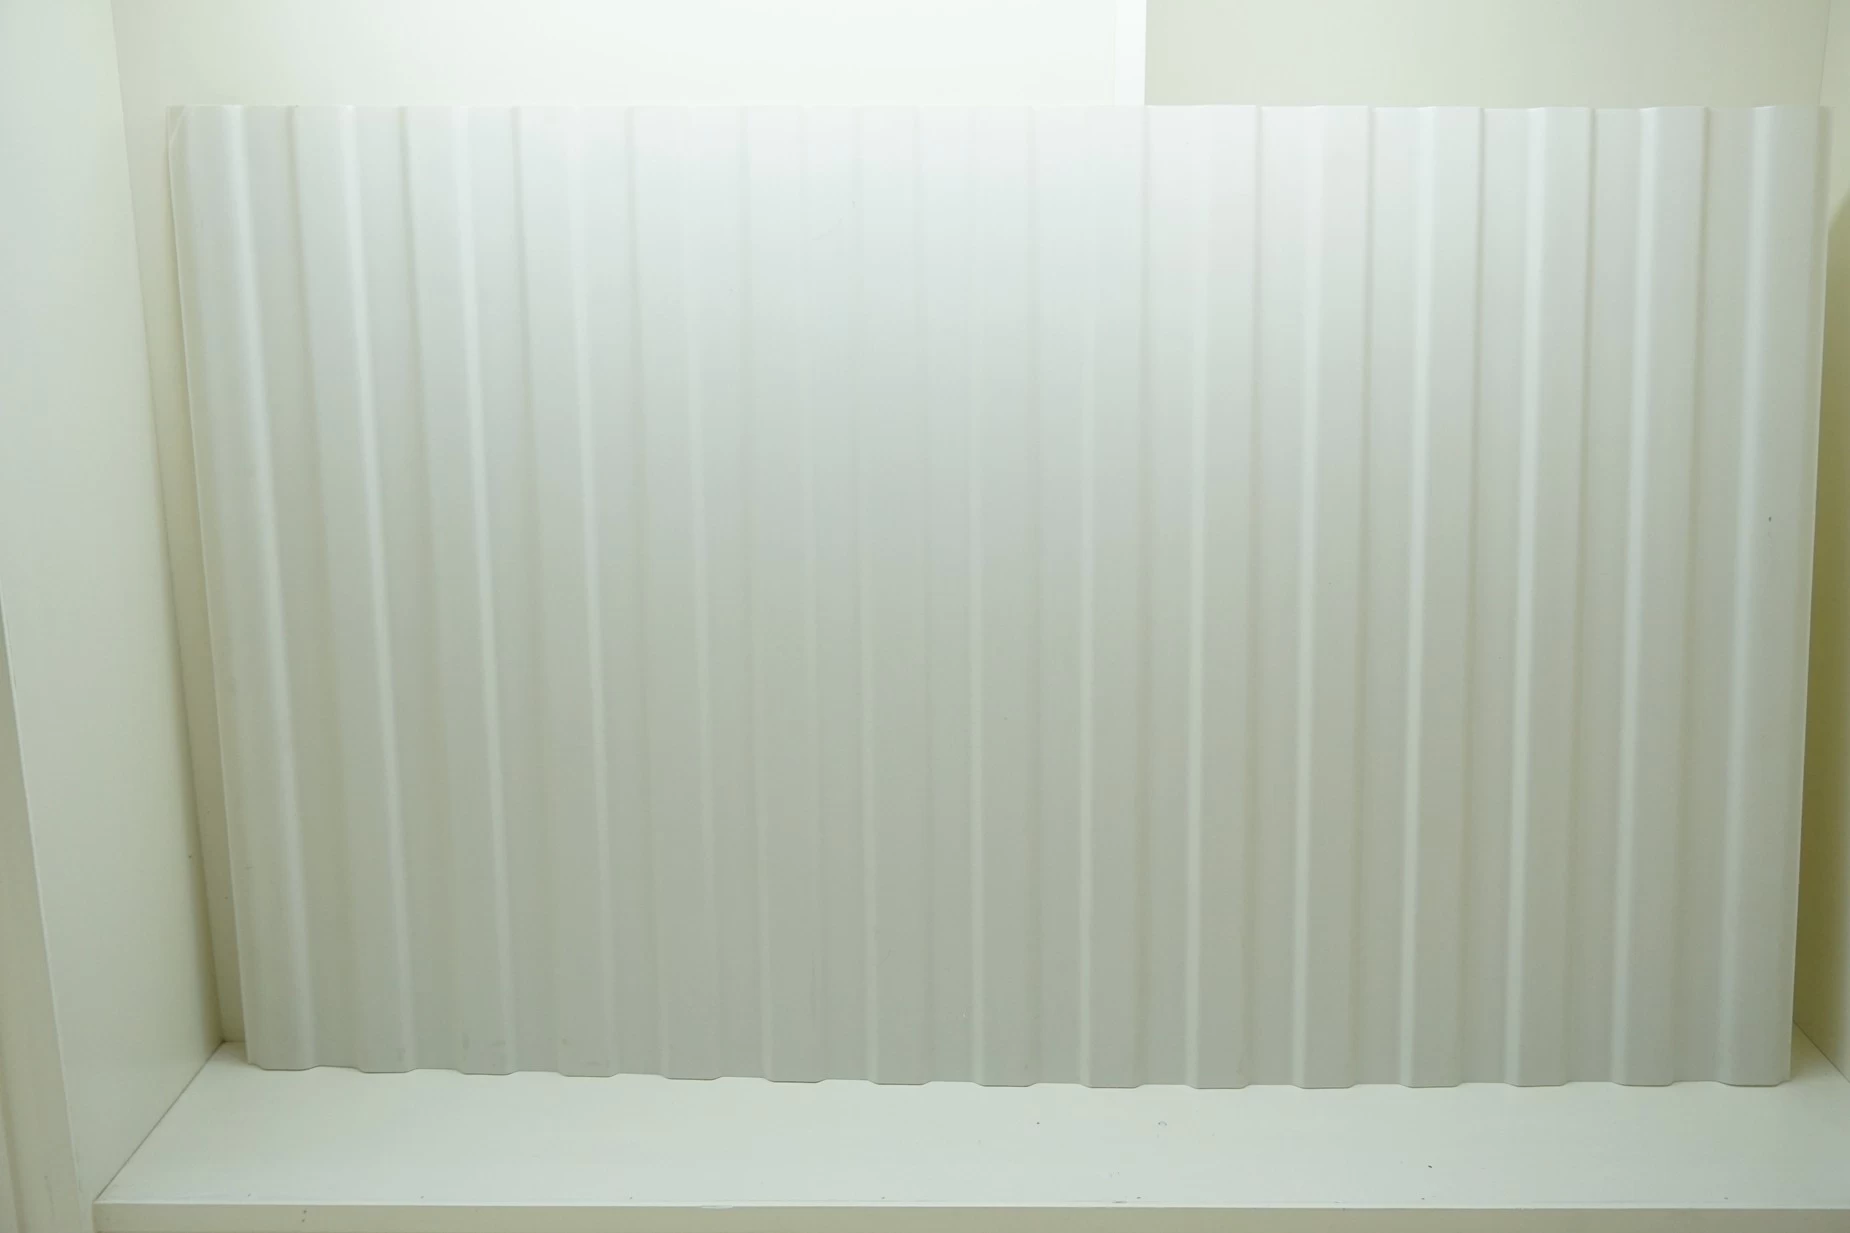 ZXC الصين المورد ورقة الحائط البلاستيكية البلاستيكية خفيفة الوزن لتسقيف المنزل